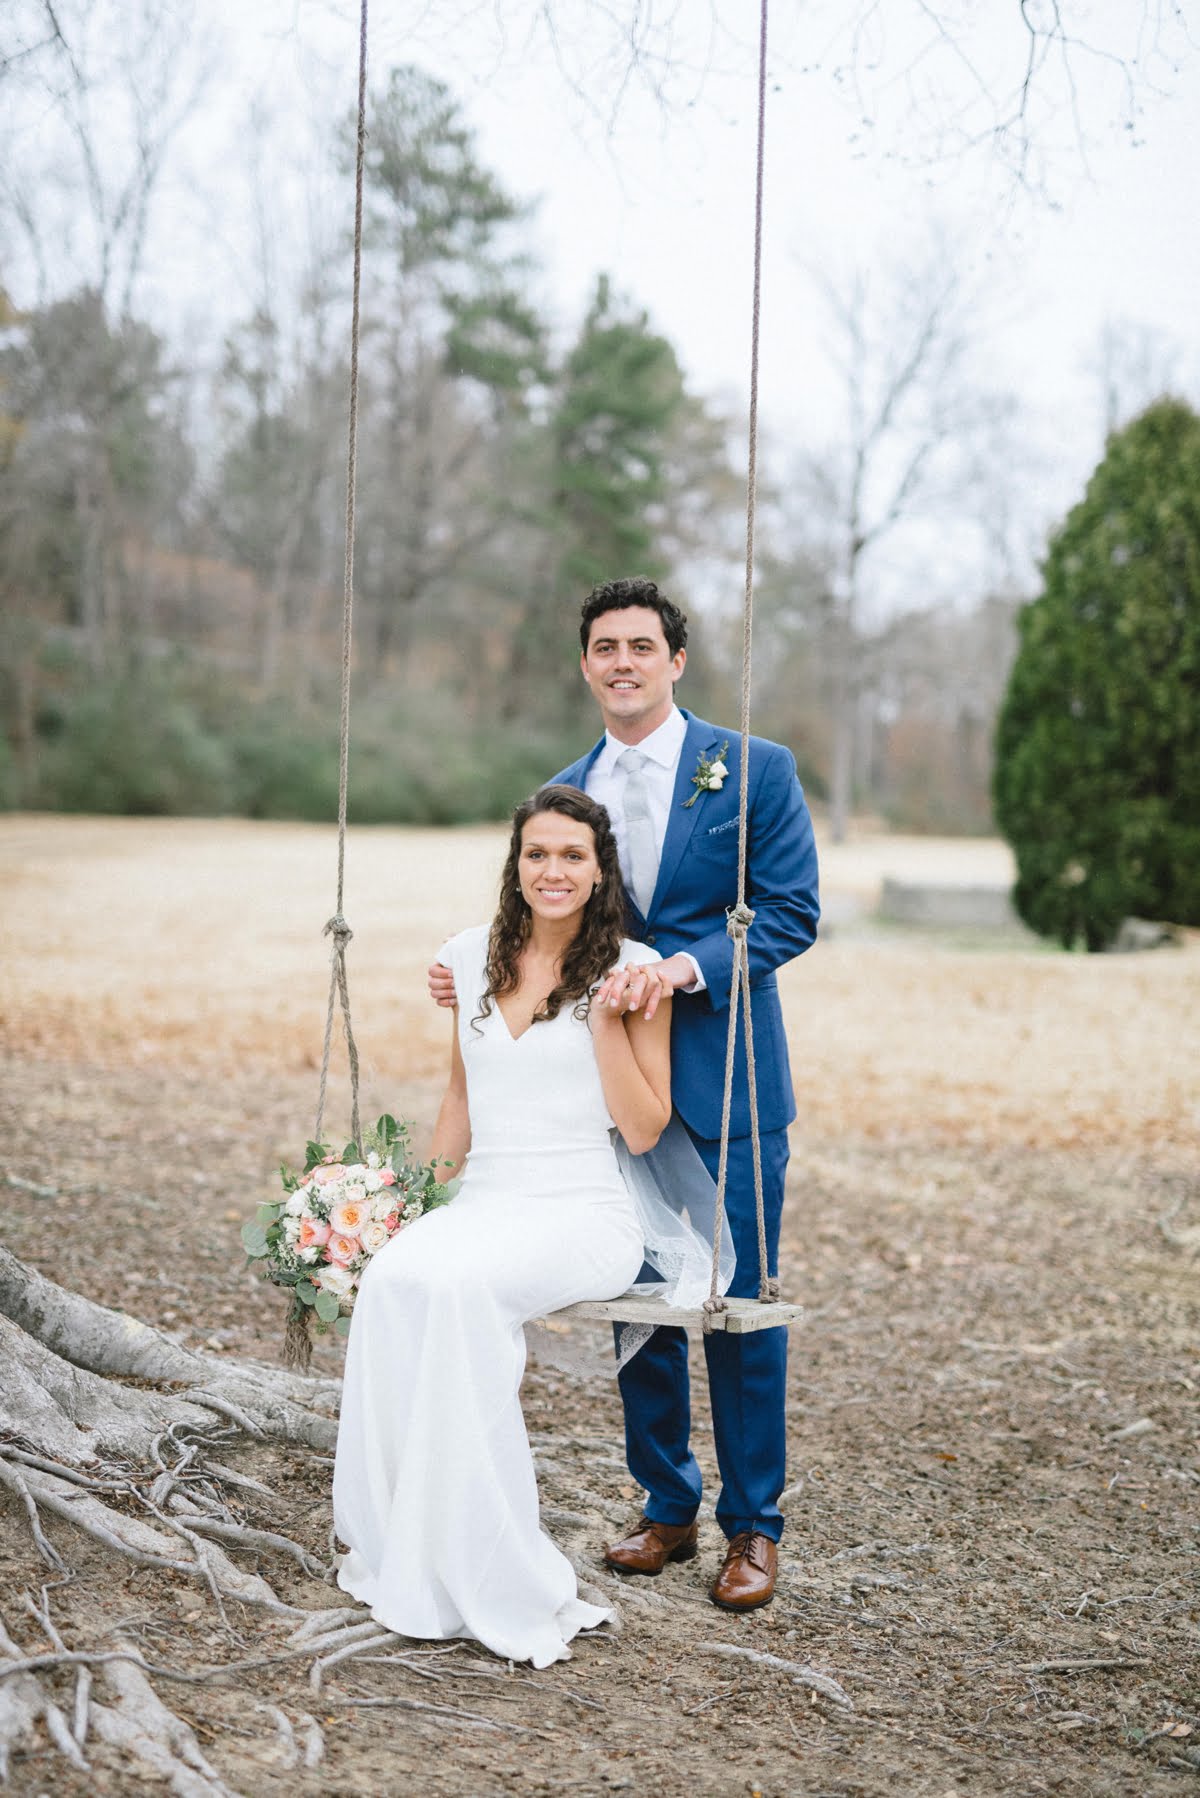 Gorgeous wedding couple portraits at Windwood Equestrian in Pelham Alabama